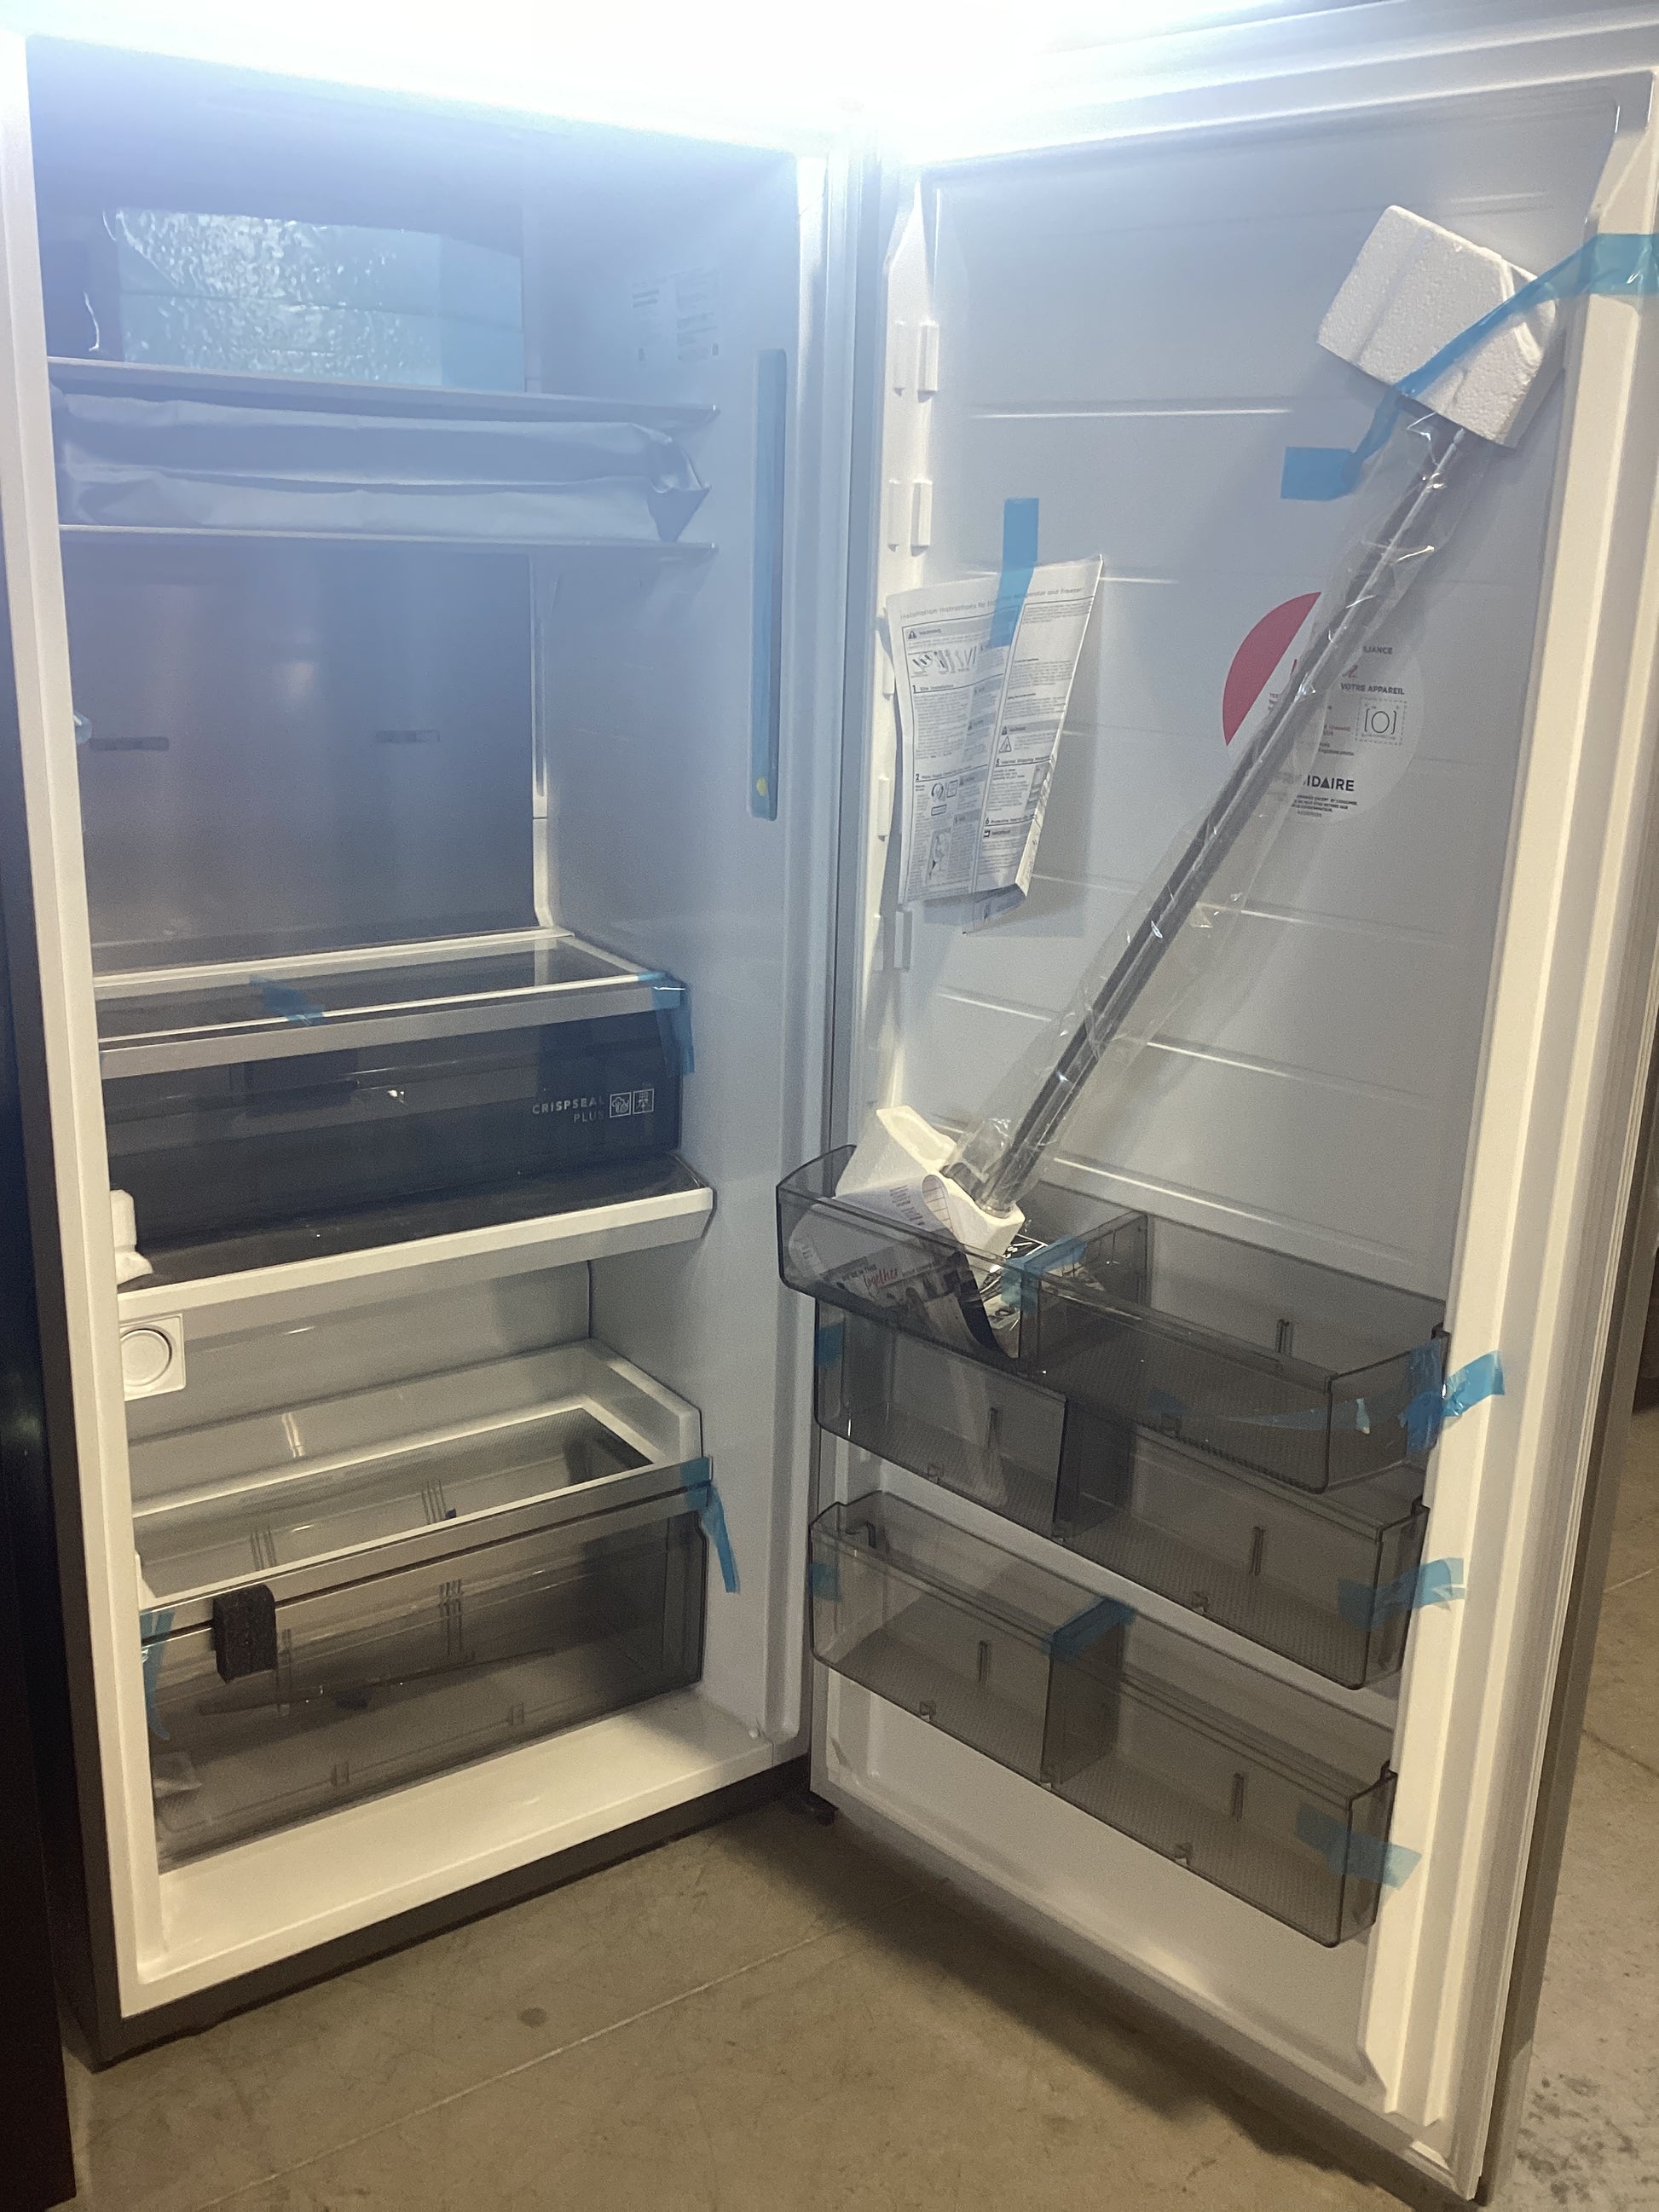 A refrigerator with open door revealing freezer inside, ready to store frozen goods.